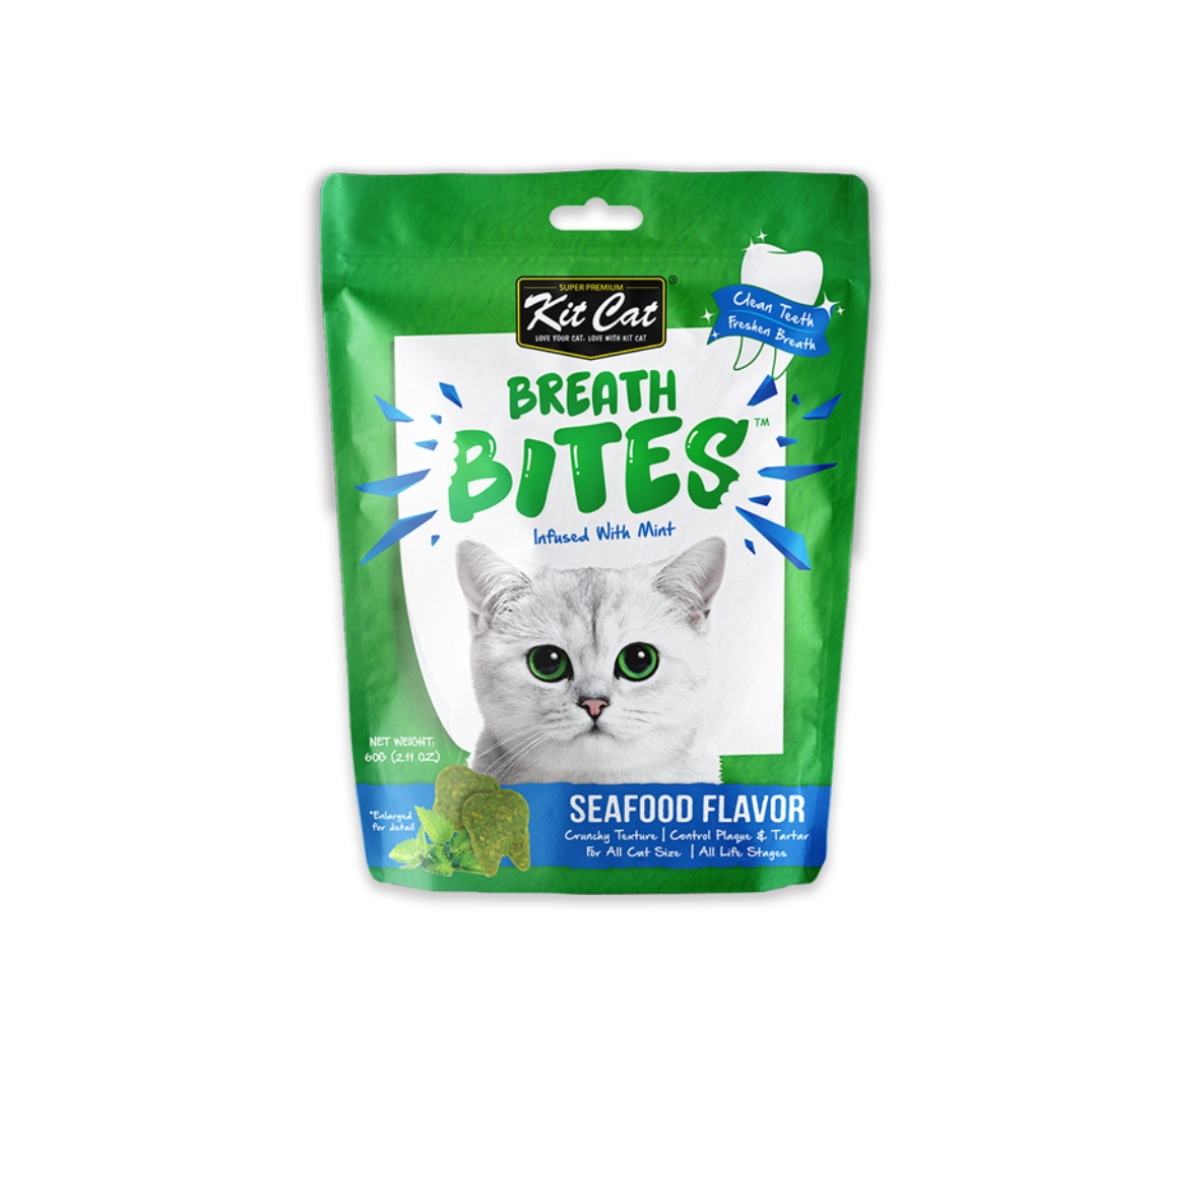 Kit Cat Breath Bites Infused with Mint Seafood Flavor คิทแคท เบรทไบรท์ ขนมขัดฟันแมว รสซีฟู๊ด ขนาด 60 กรัม